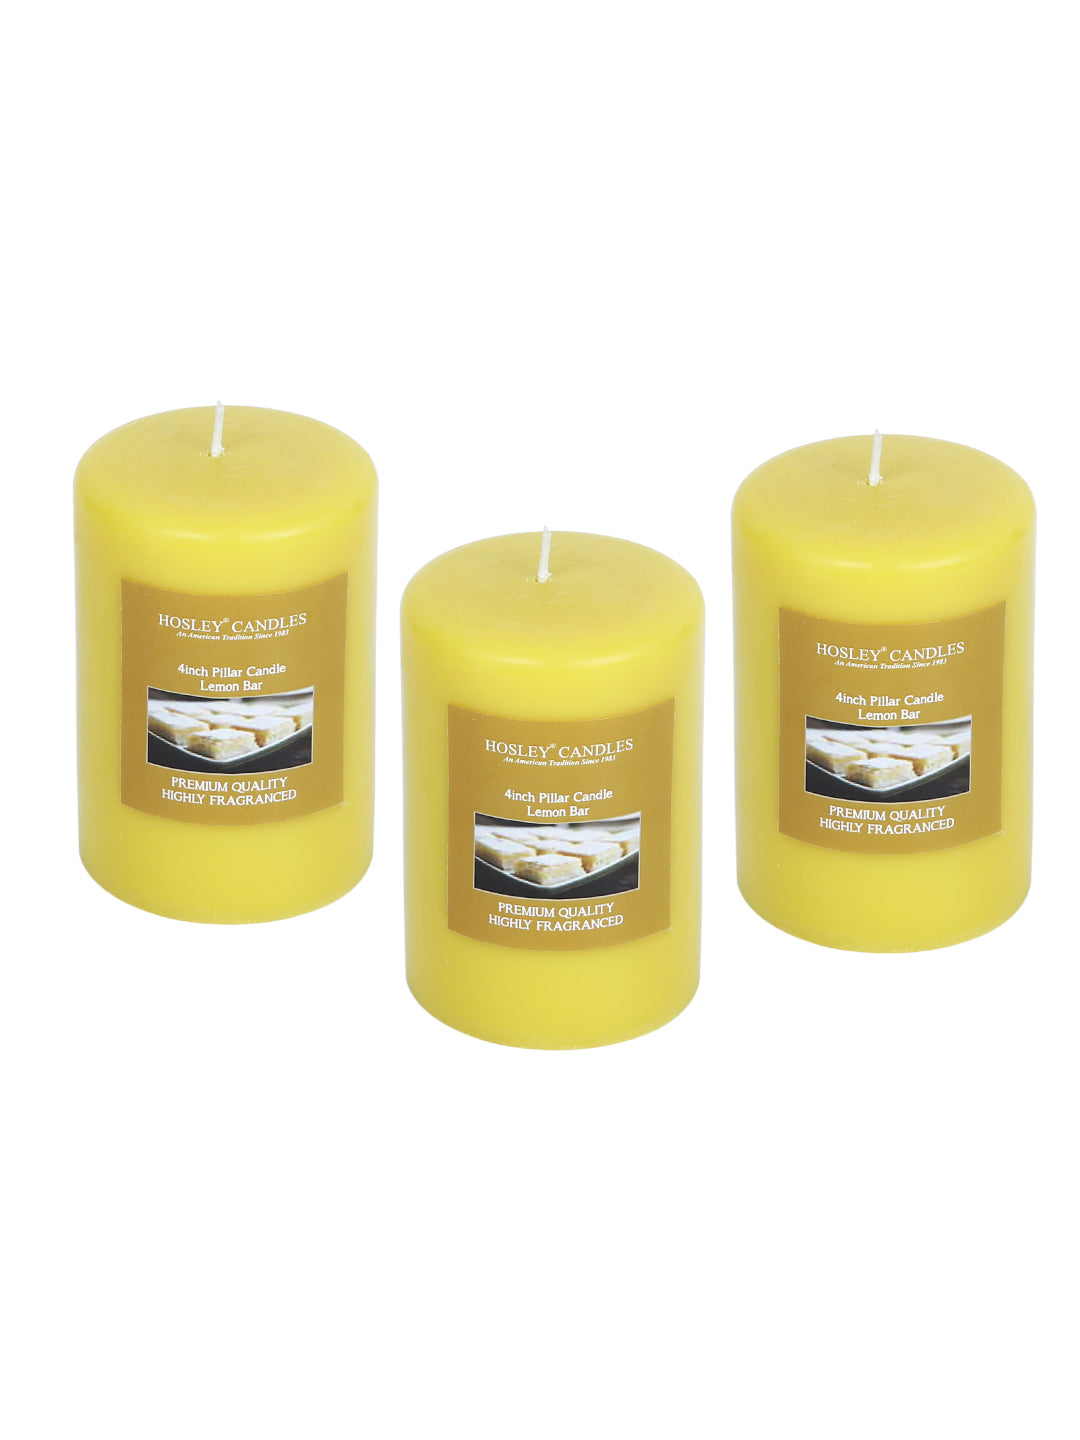 Hosley Set of 3 Lemon Bar 4Inchs Pillar Candles